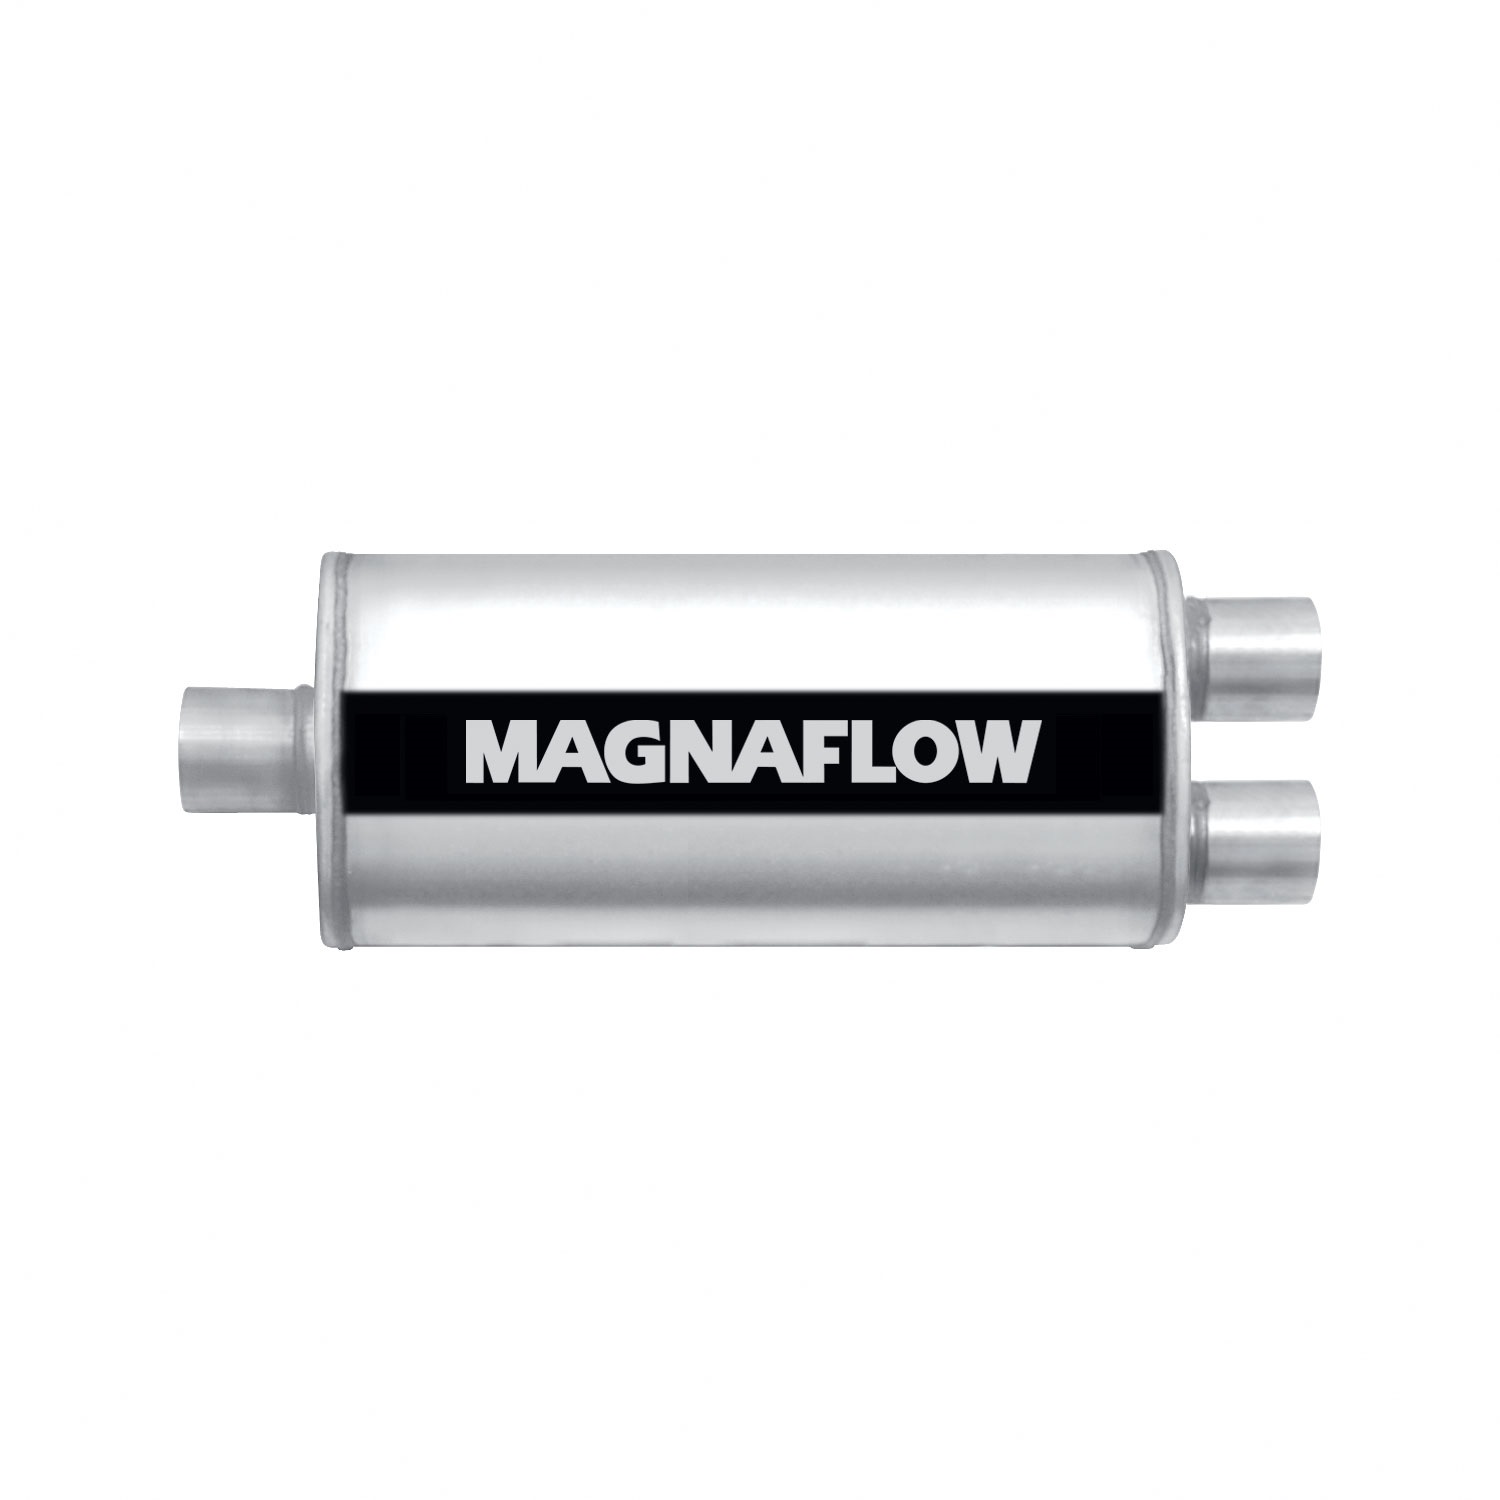 Magnaflow Performance Exhaust Magnaflow Performance Exhaust 12280 Stainless Steel Muffler